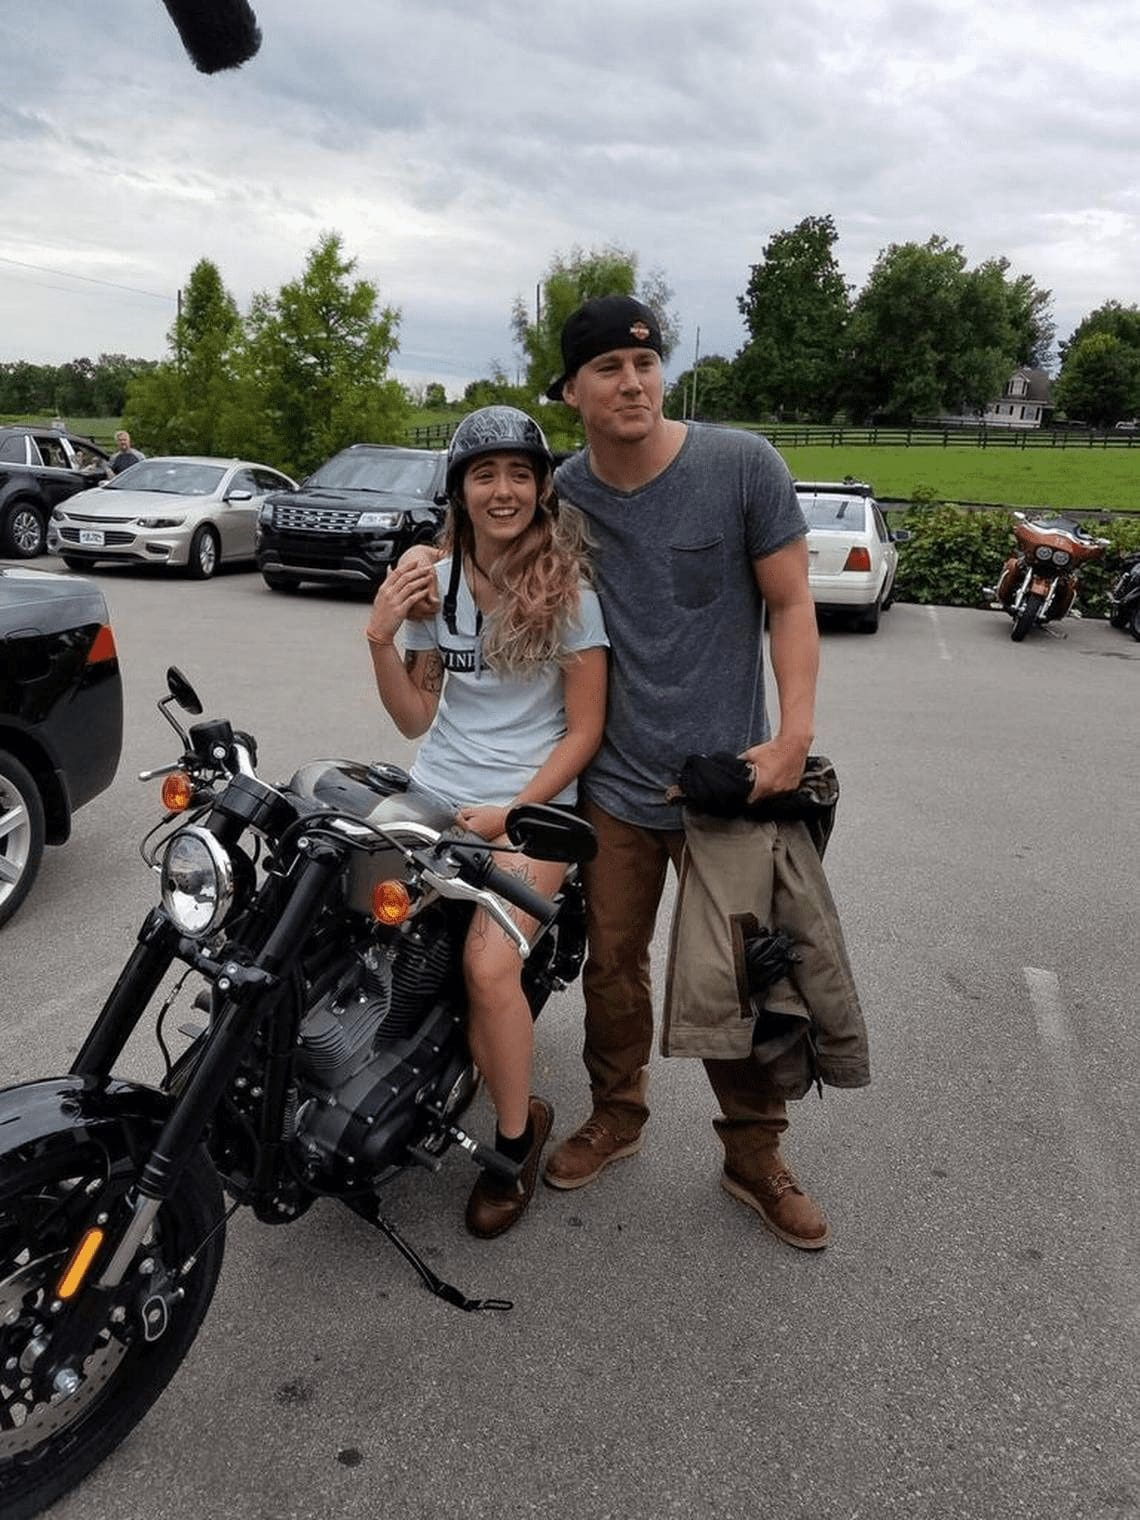 Channing Tatum gives away his Harley Davidson